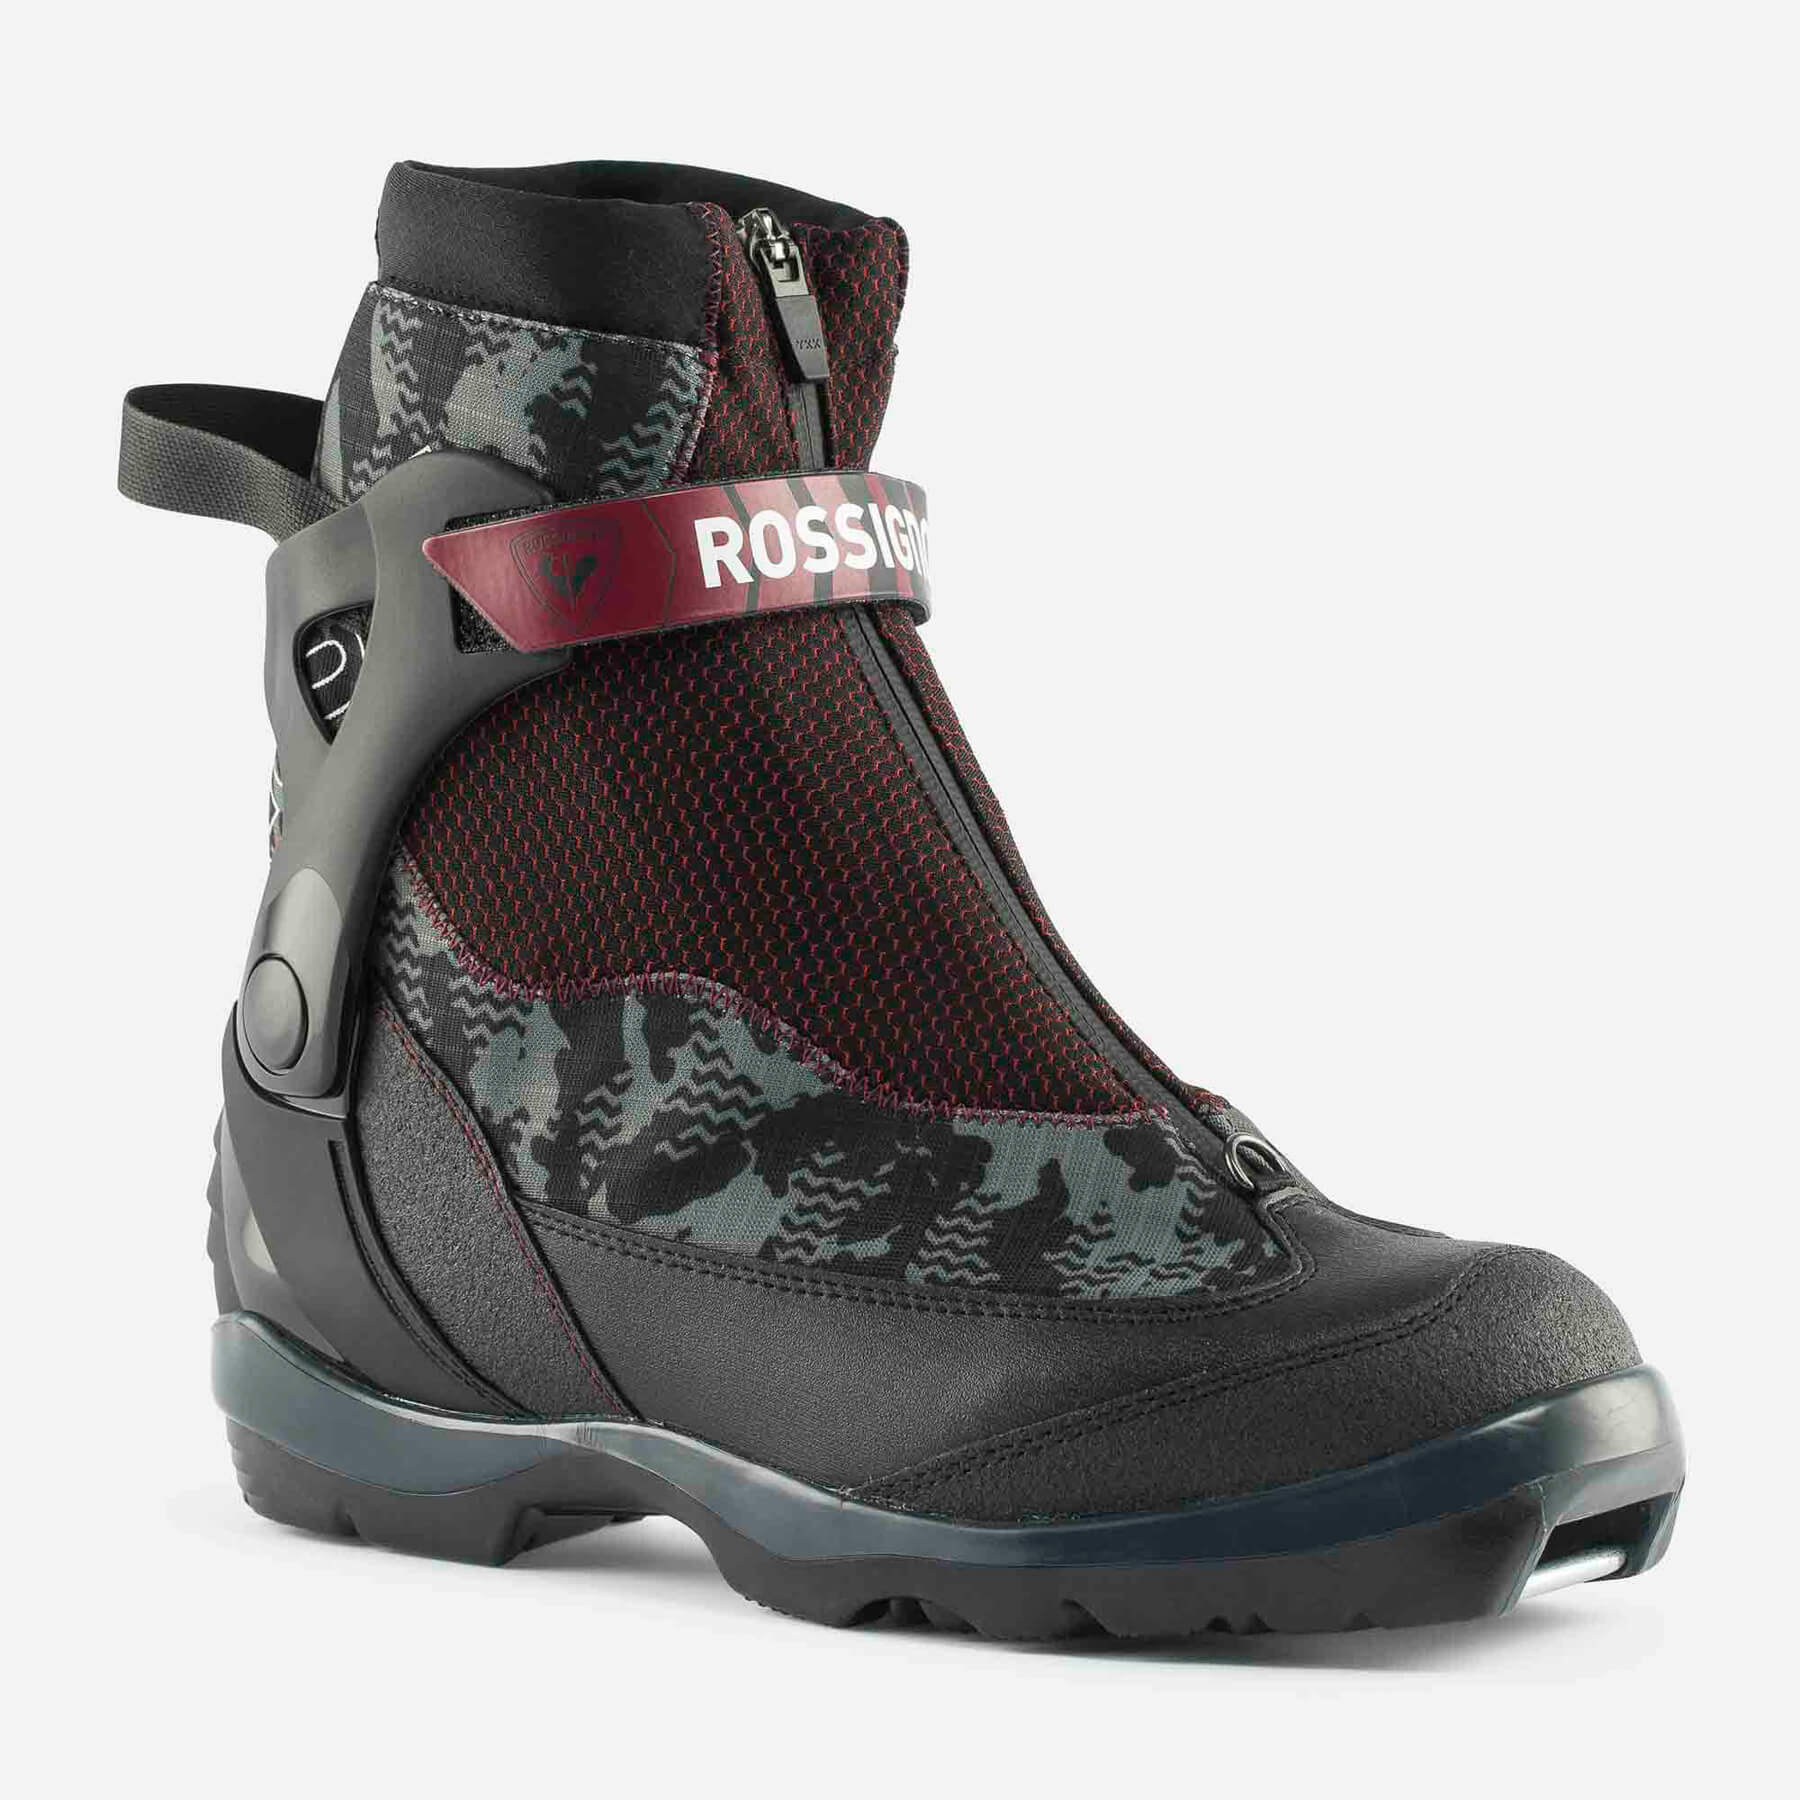 Rossignol BC X6 BC Boot